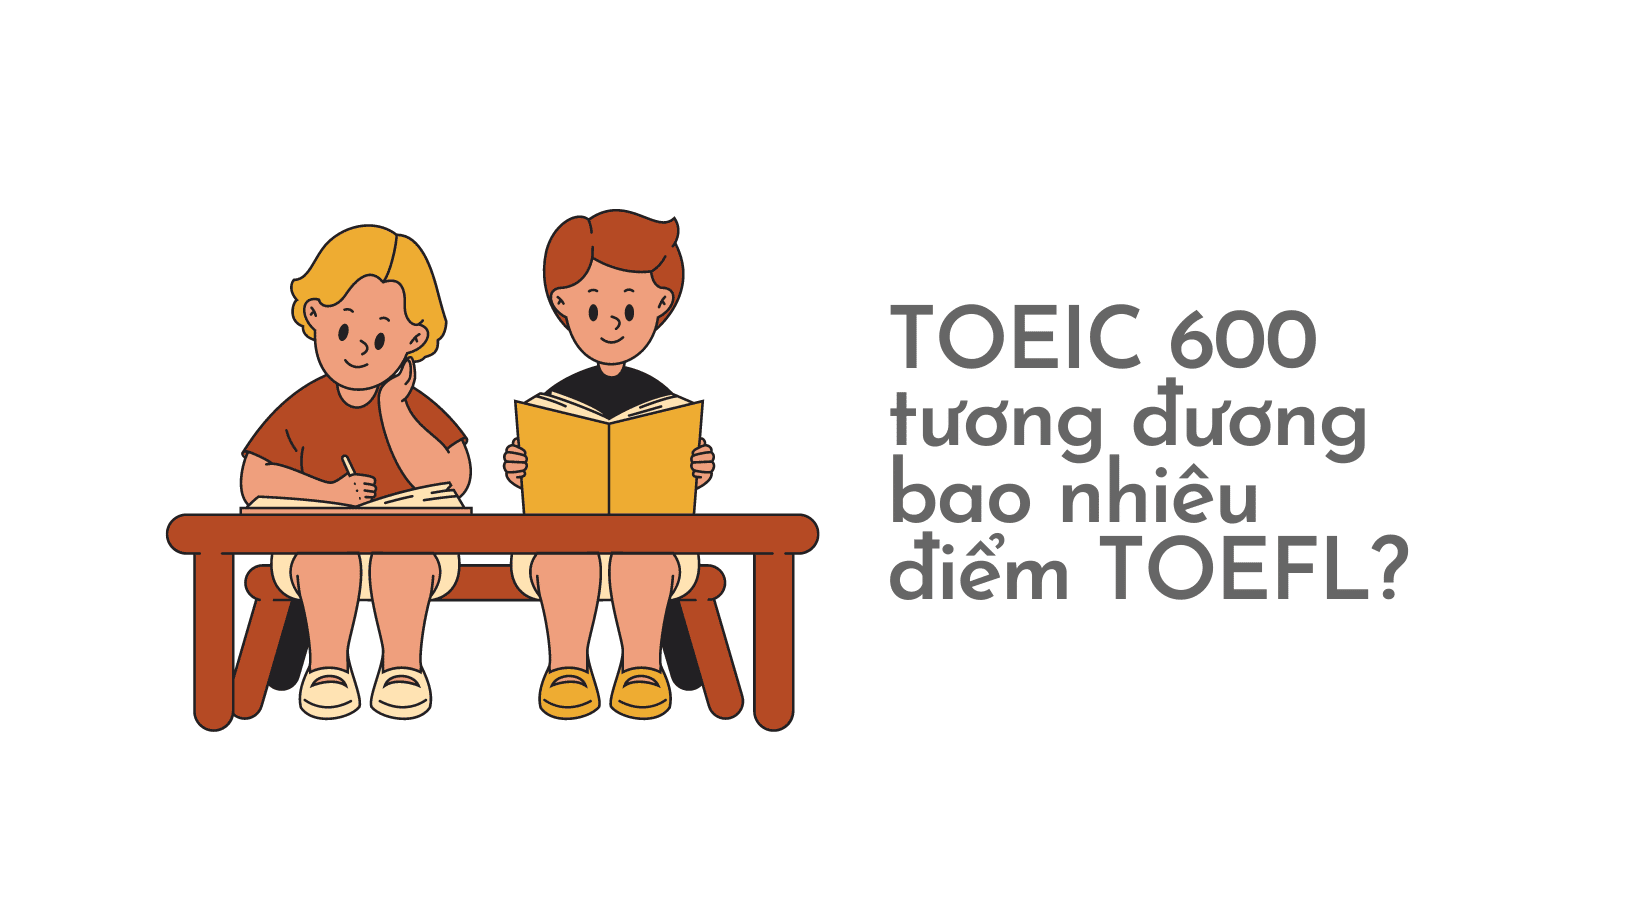 Toeic 600 Toefl